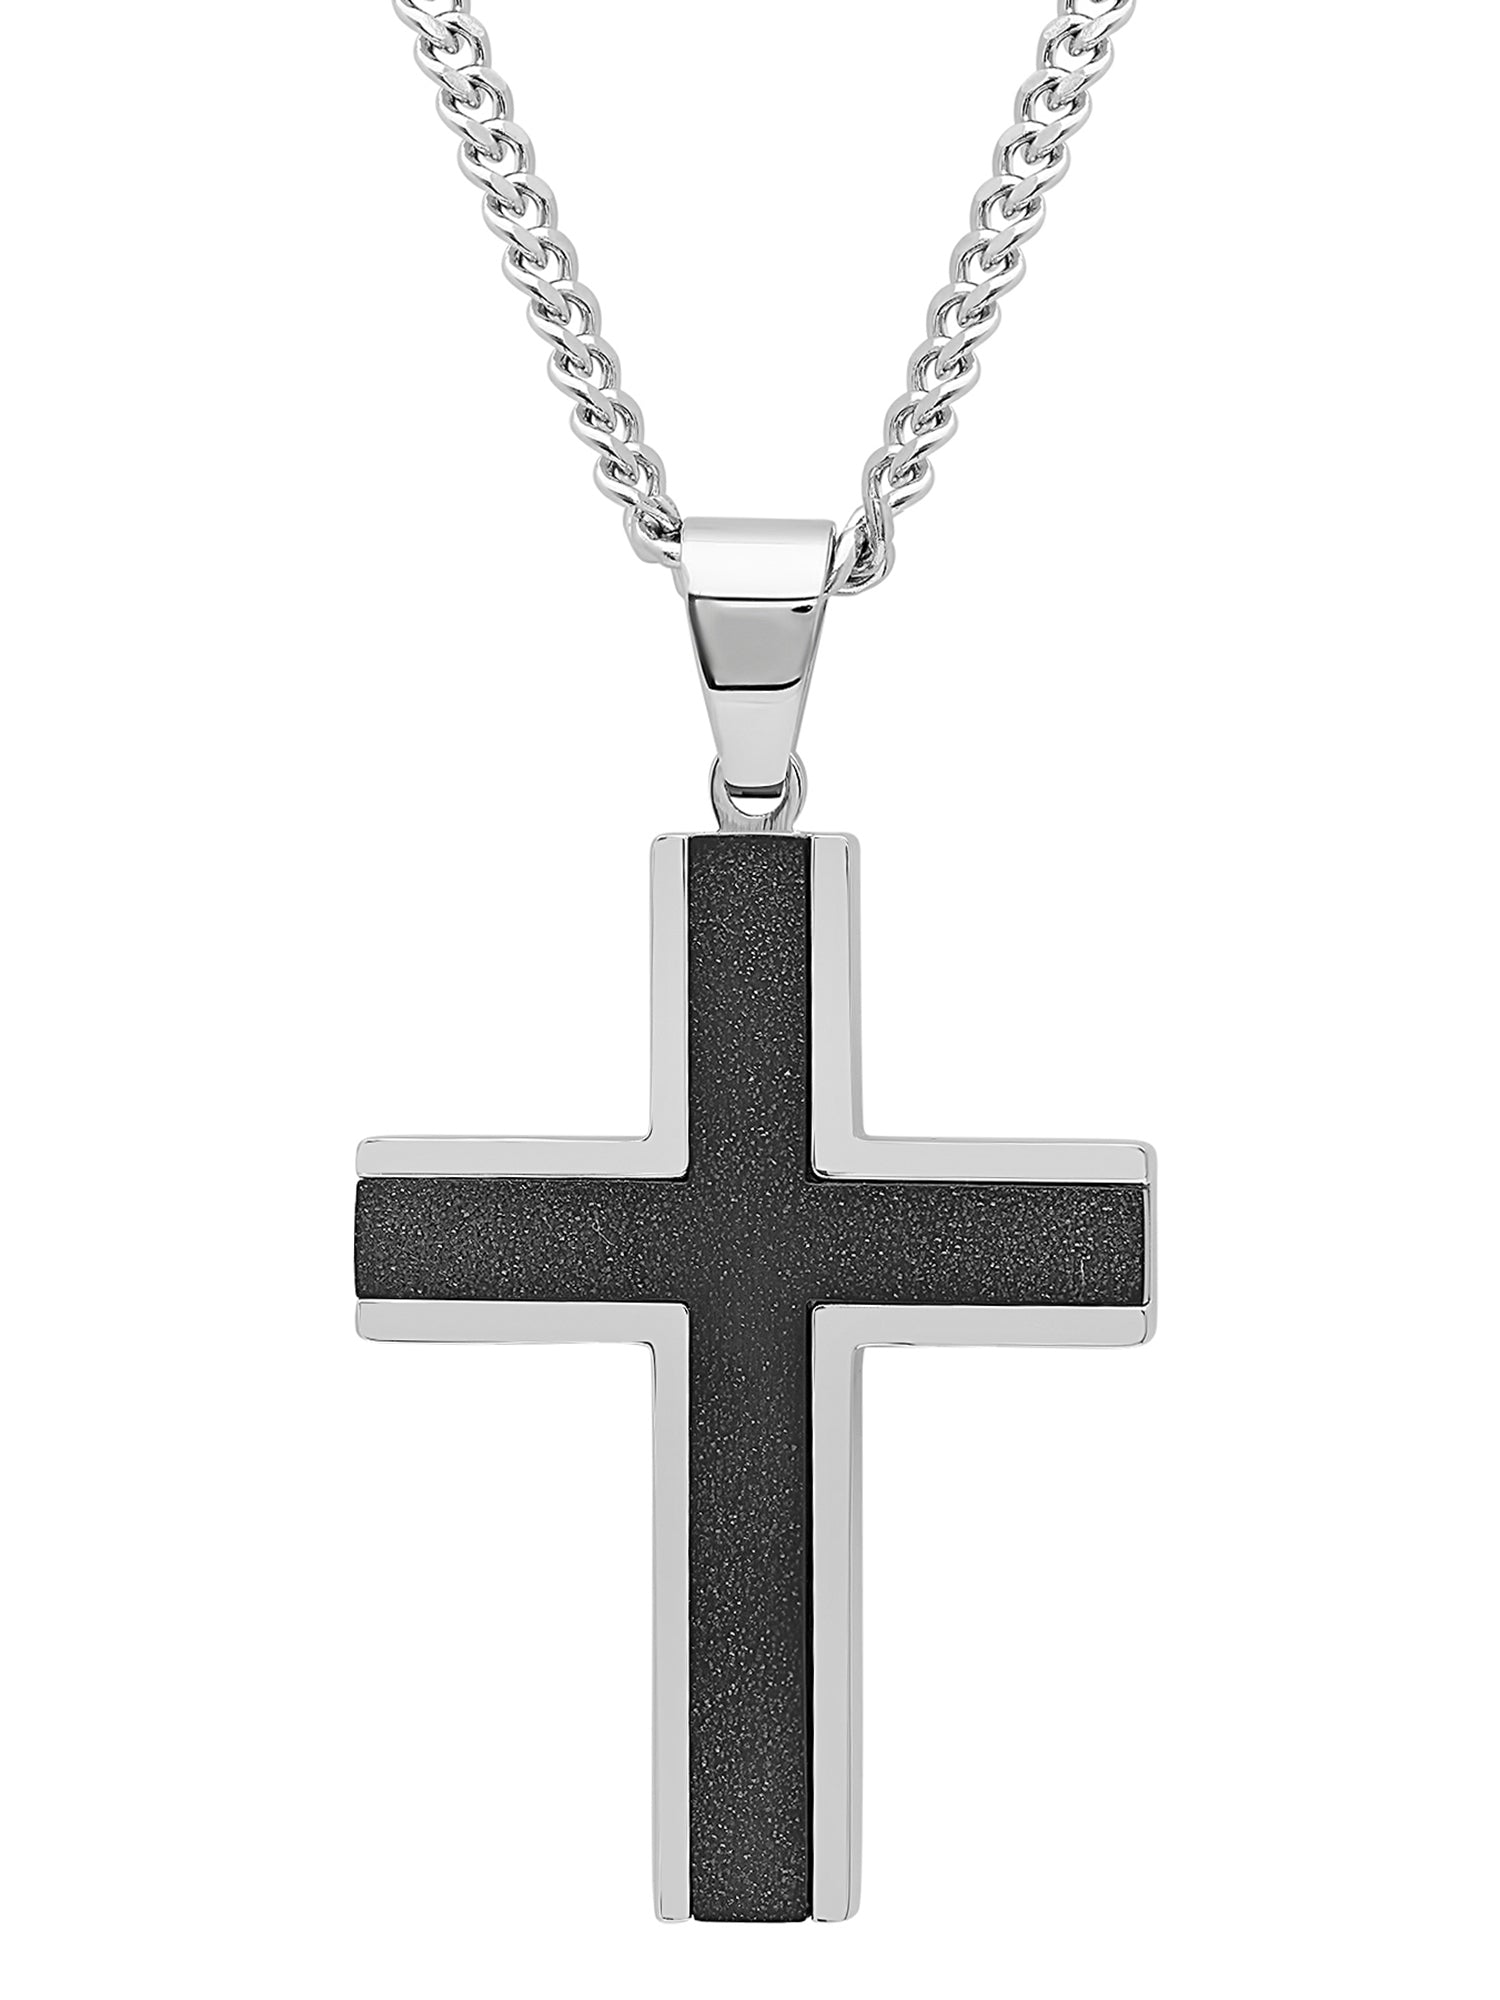 Men's Stainless Steel Textured Cross Pendant Necklace